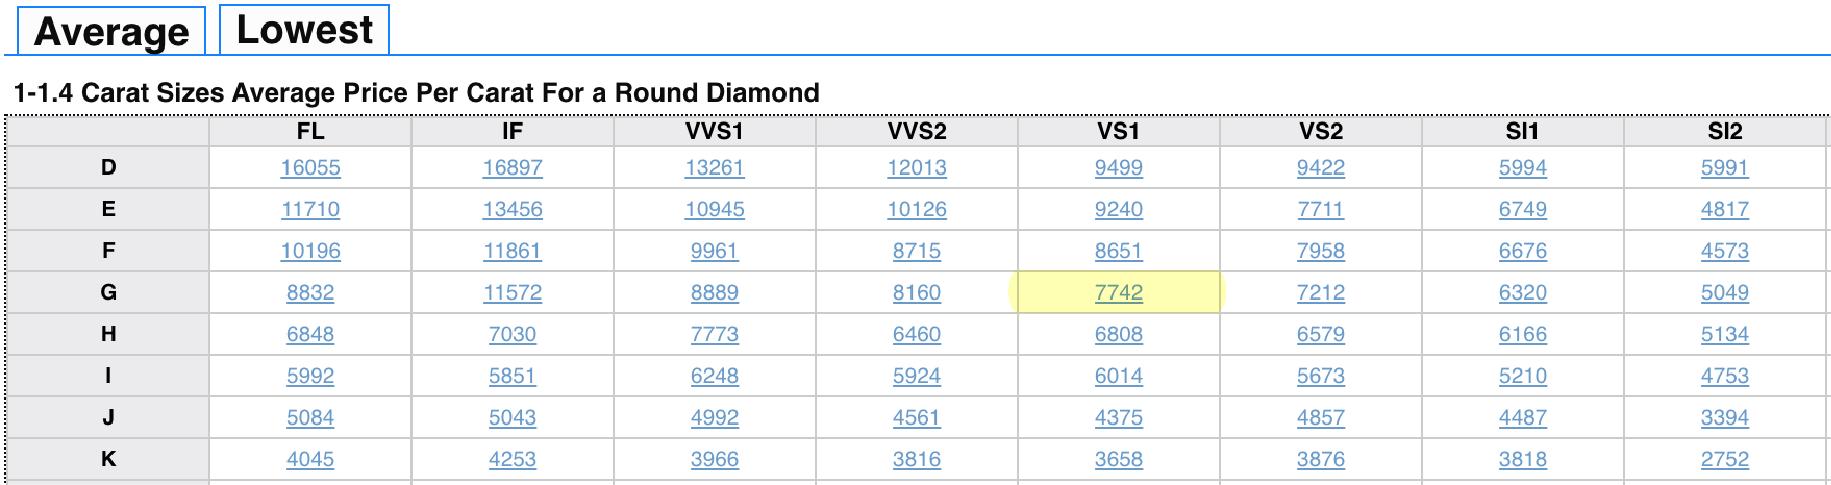 1 - 1.4 Carat Sizes Average Price Per Carat For a Round Diamond.